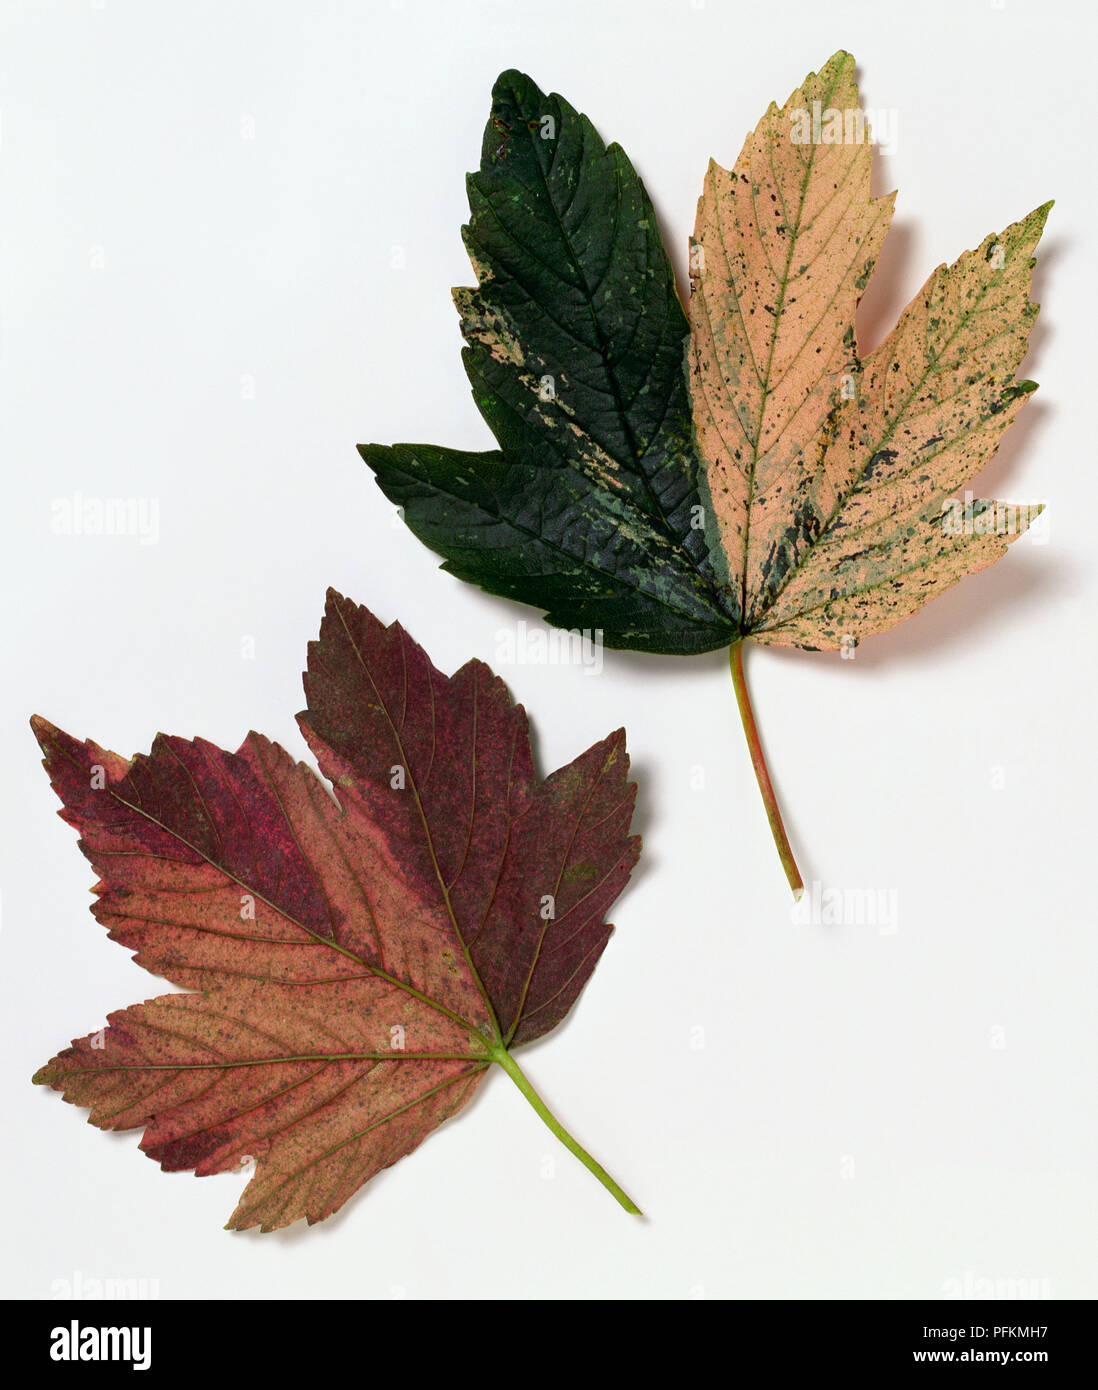 Acer pseudoplatanus 'Nizetii' (Sycamore) leaves Stock Photo